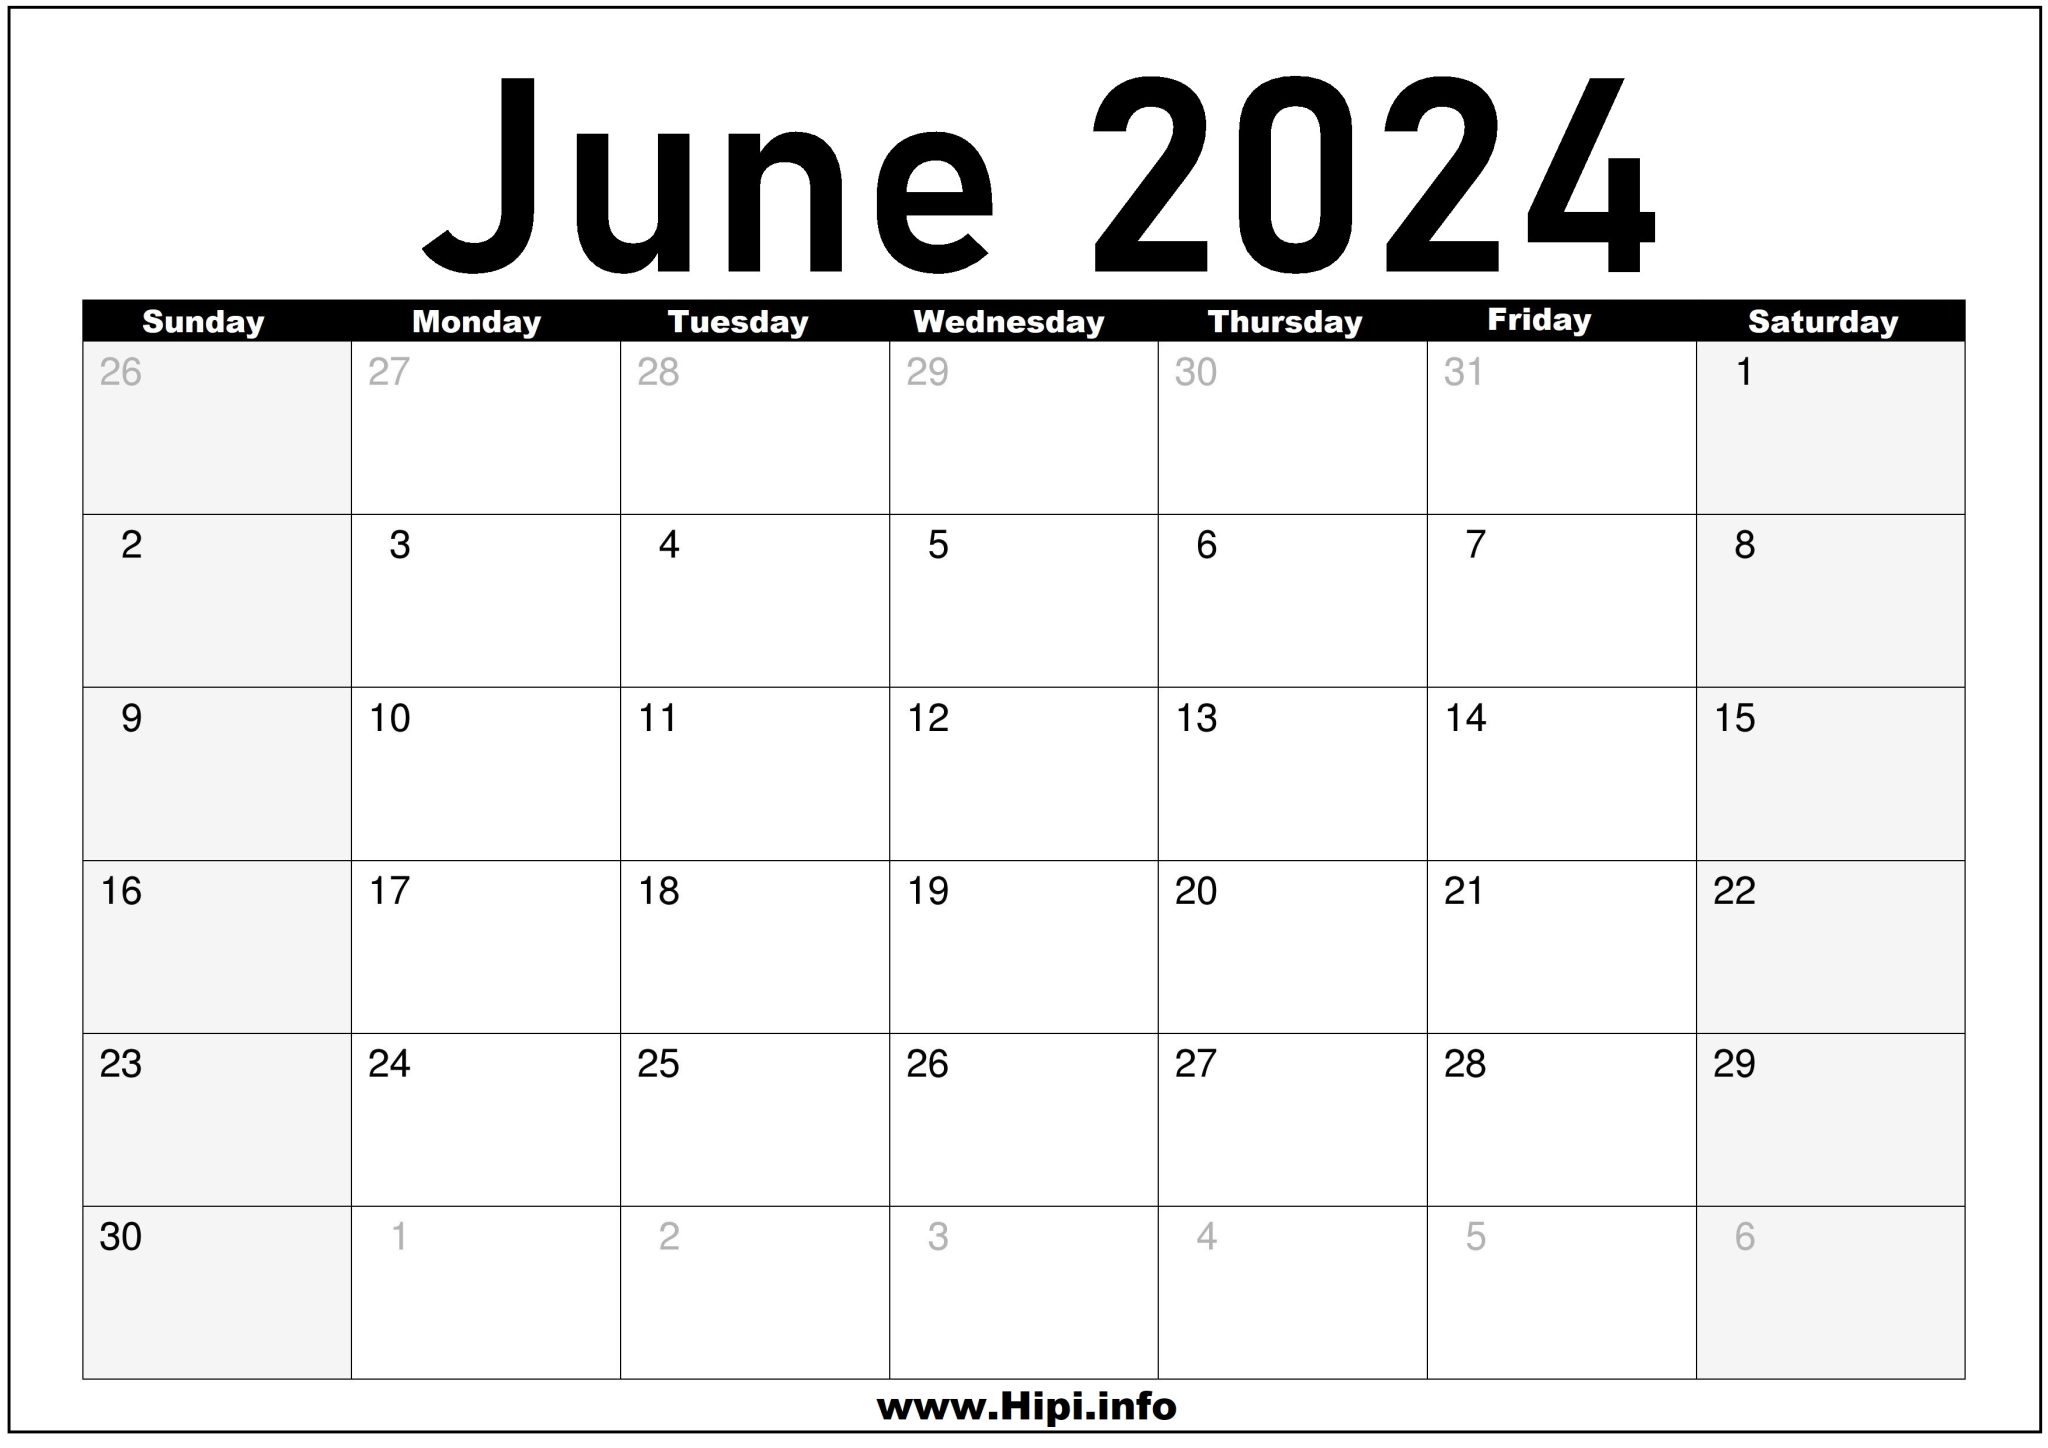 june-2024-monthly-calendar-hipi-info